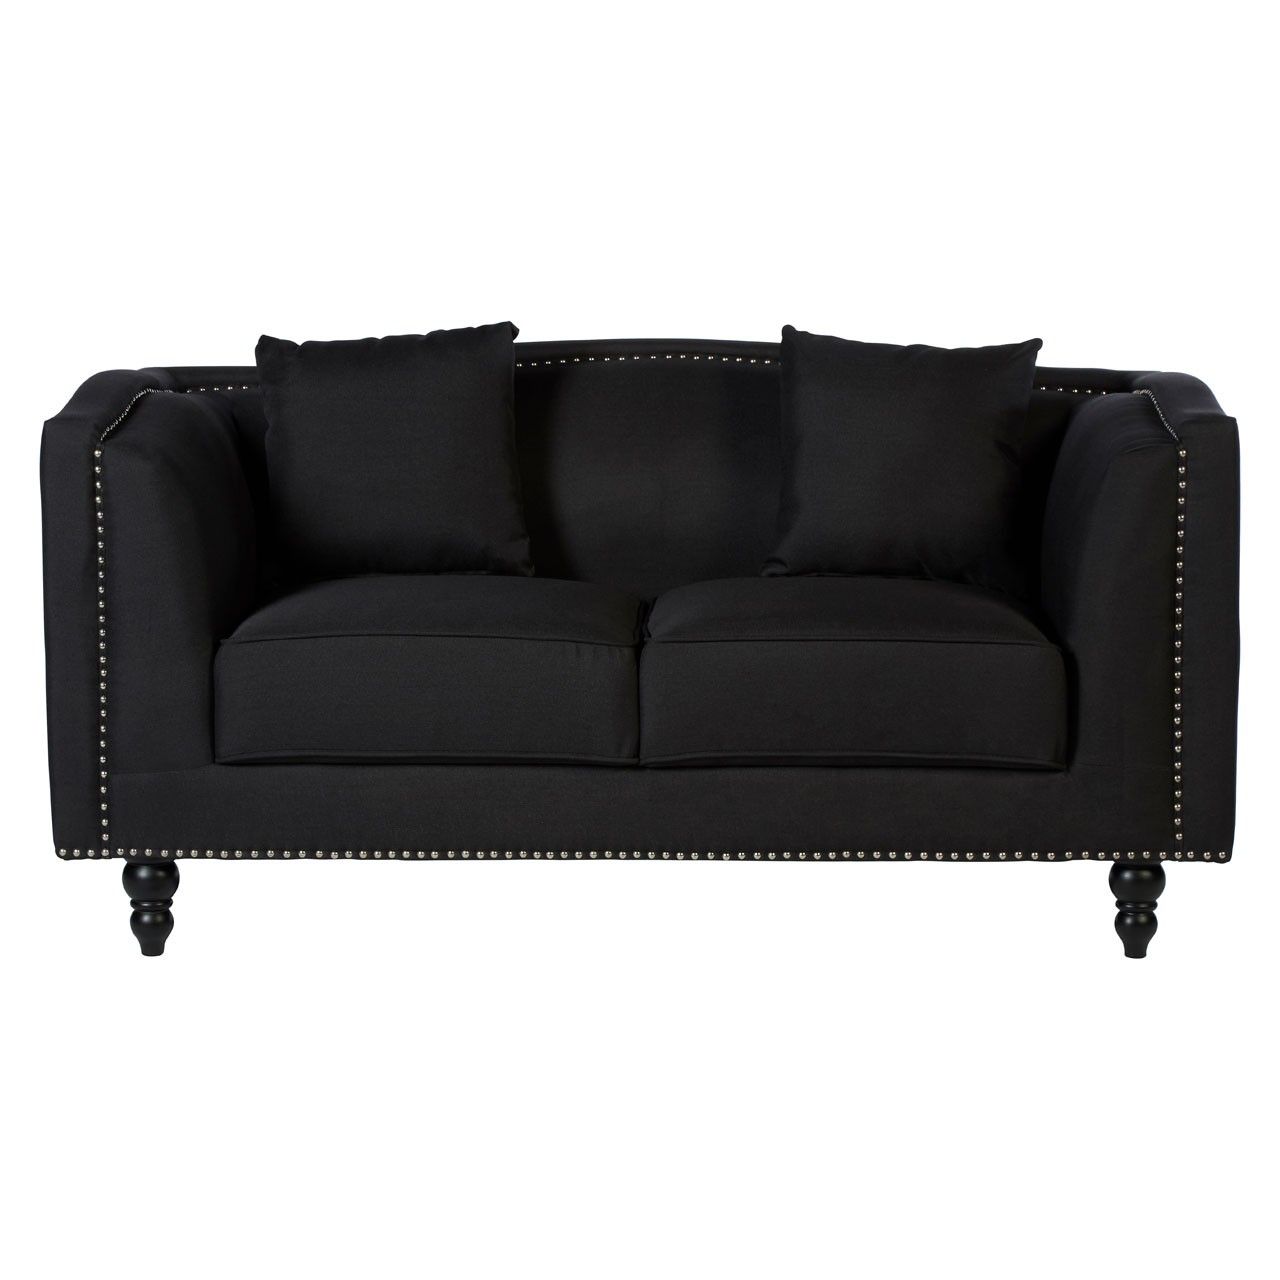 Feya 2 Seat Black Fabric Sofa Throughout Traditional Black Fabric Sofas (Gallery 13 of 21)